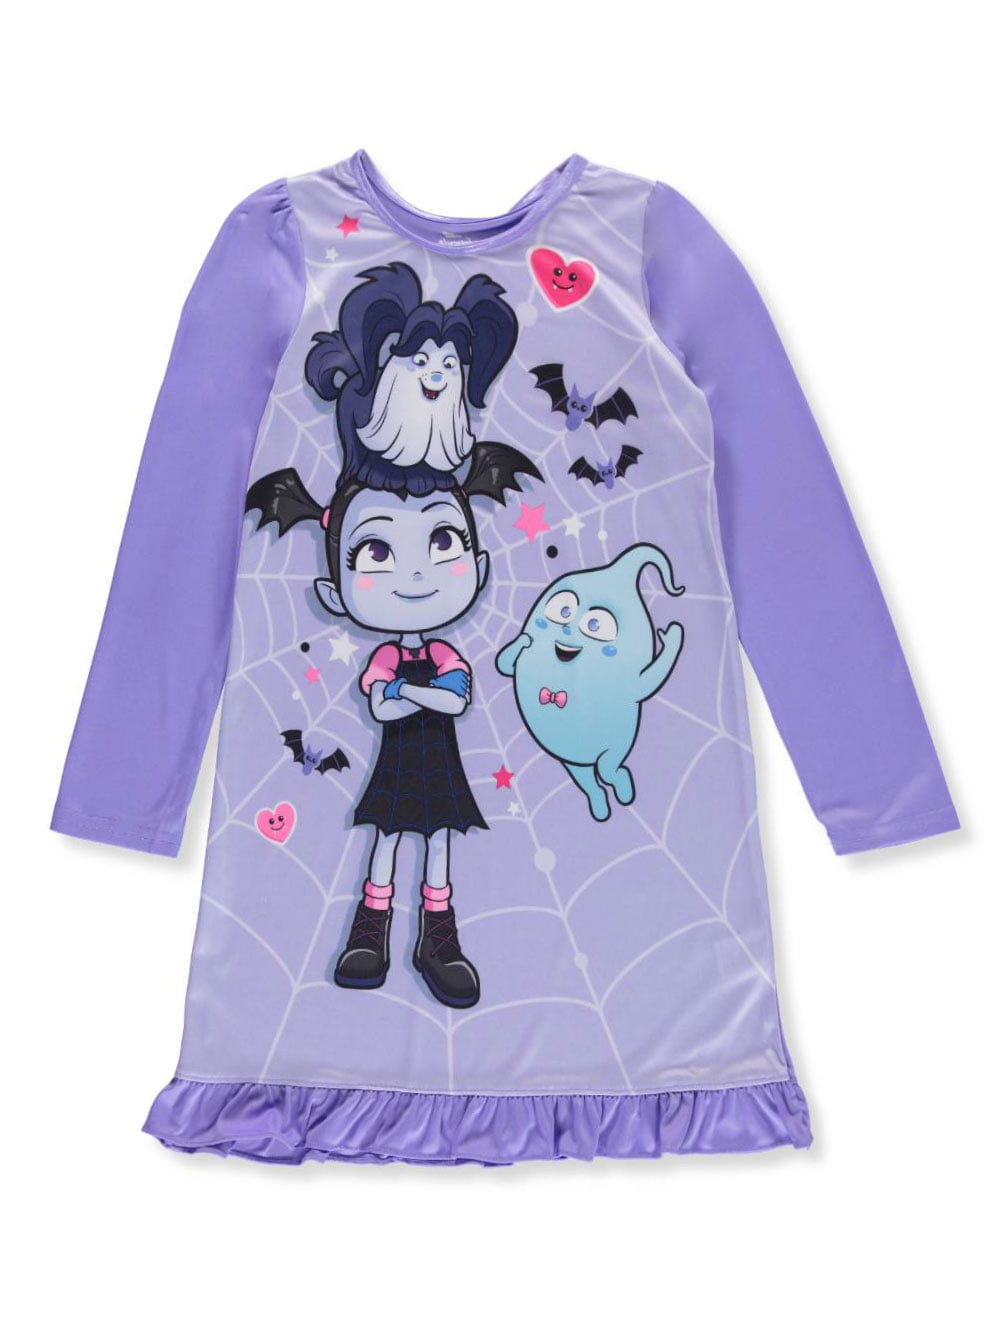 Disney Vampirina Girls Short Sleeve Nightgown Pajamas